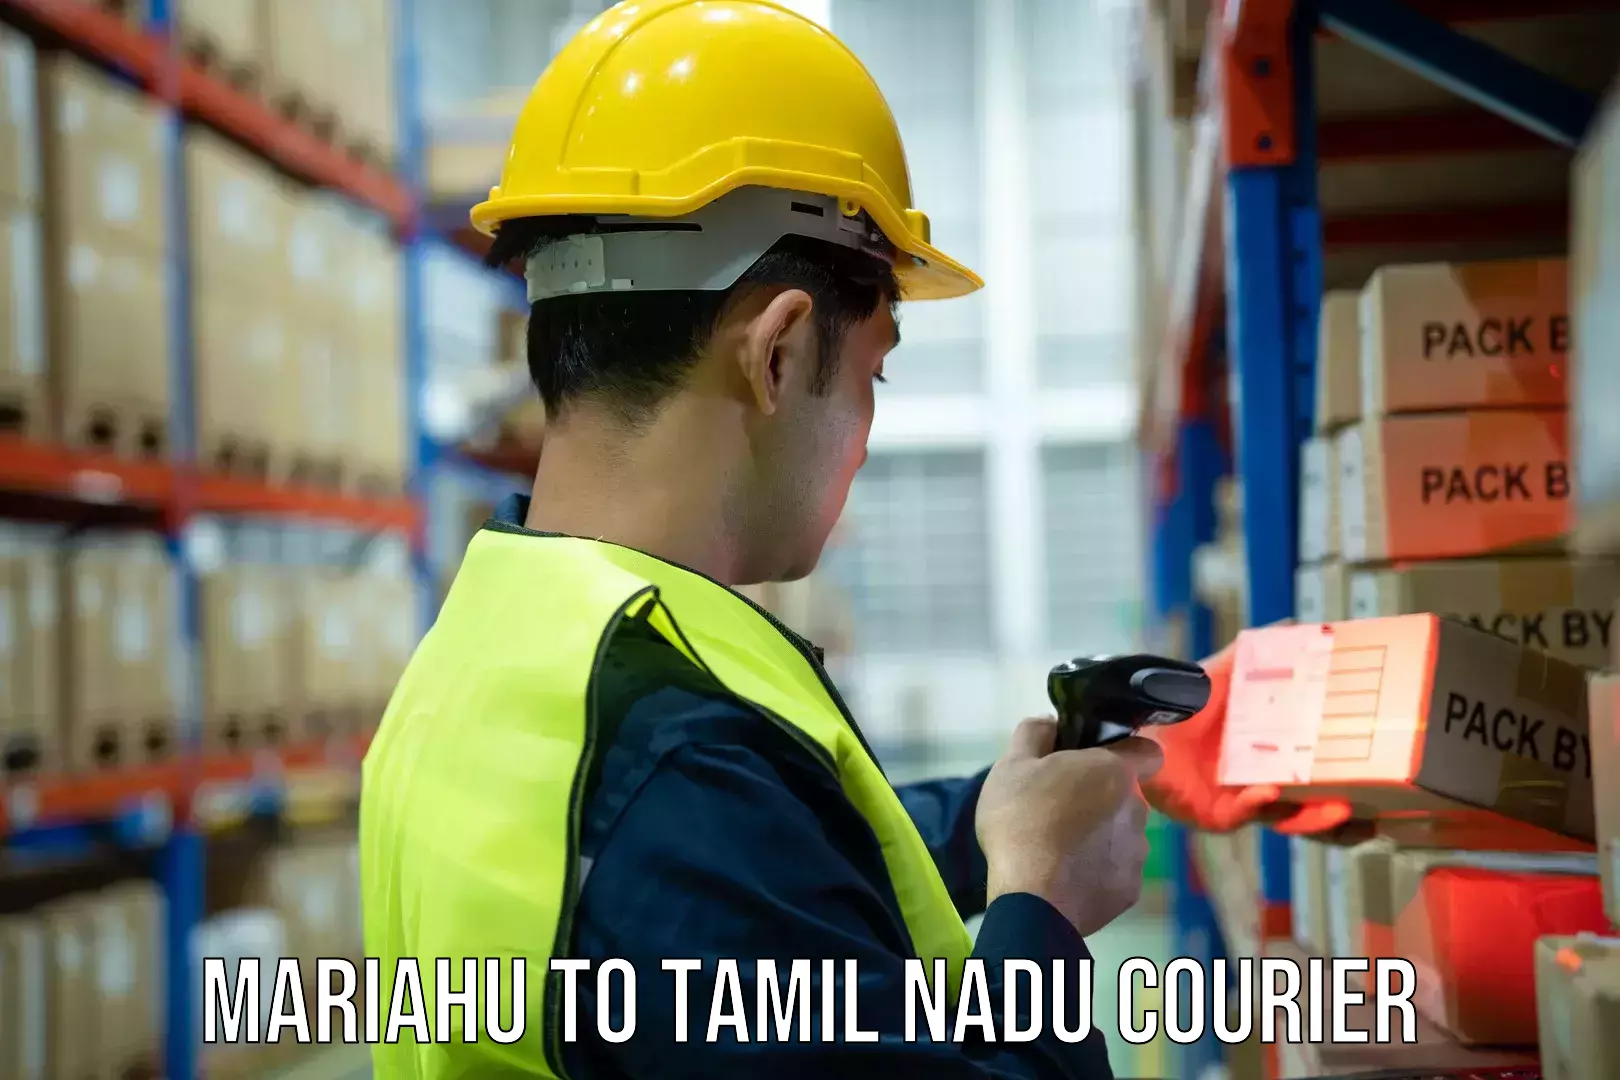 Courier service comparison Mariahu to Kodaikanal